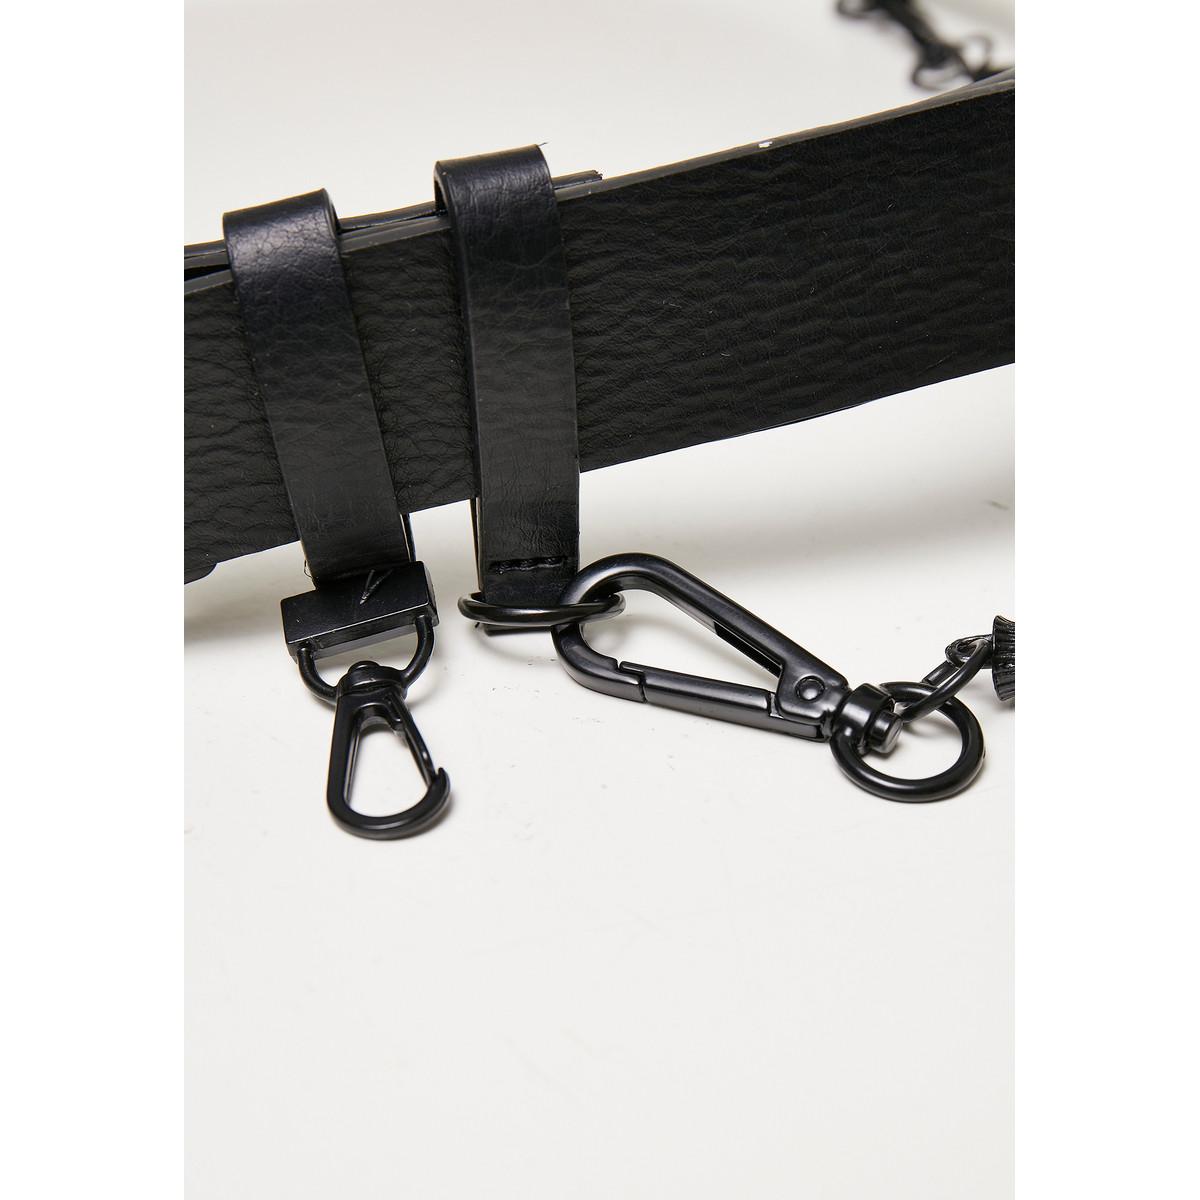 URBAN CLASSICS  gürtel imitation leather with key chain 